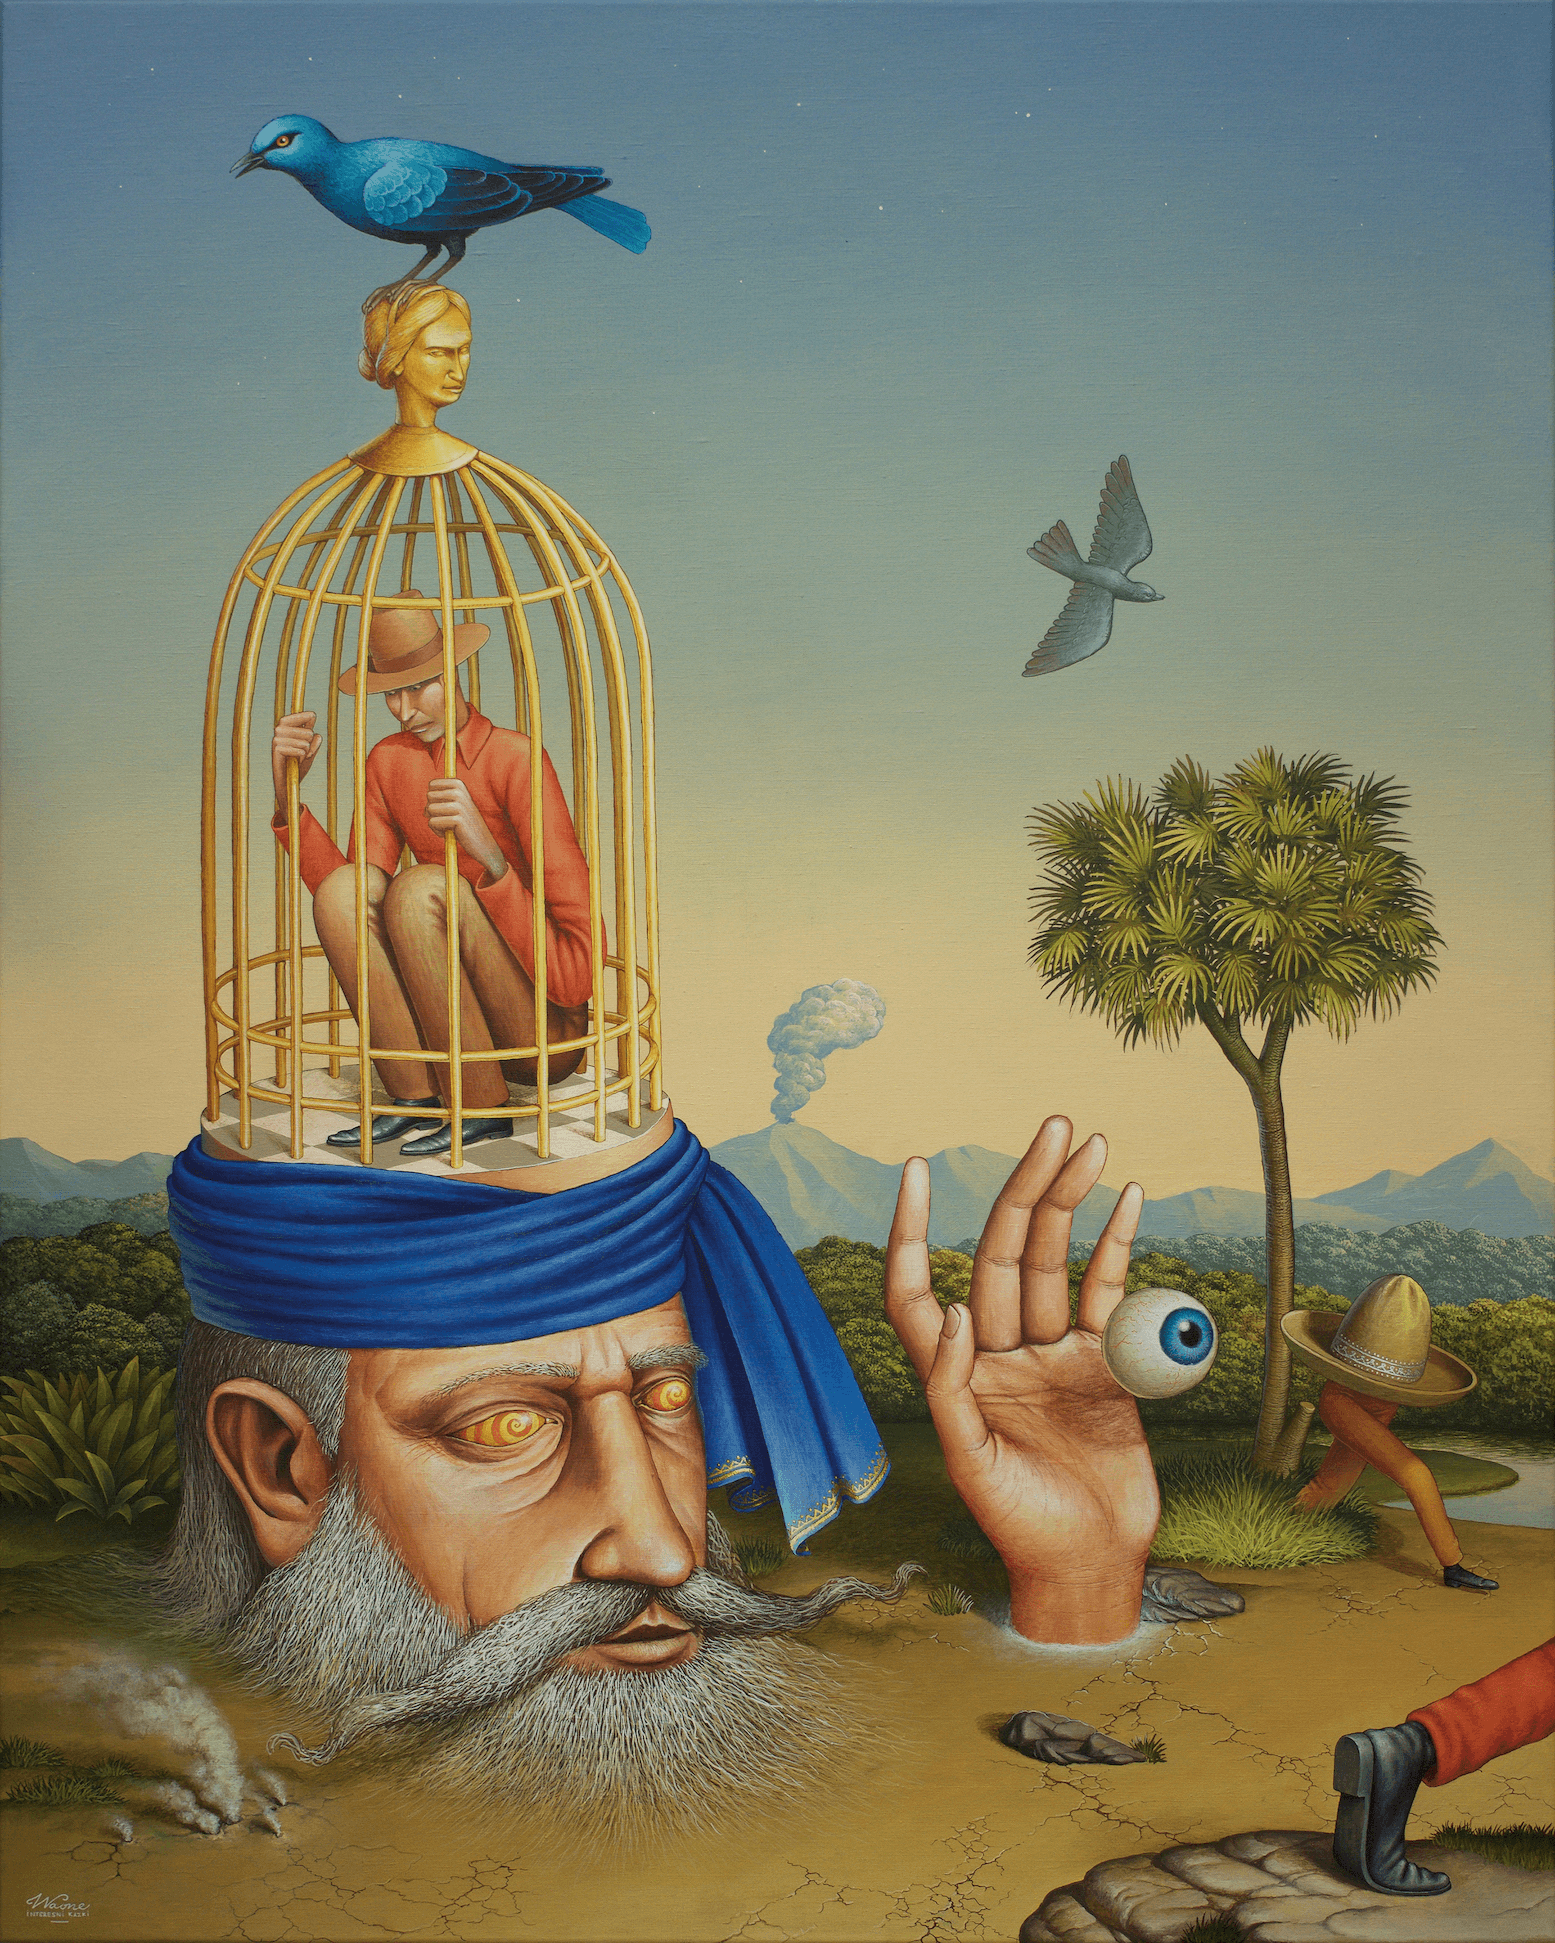 Prisoned Mind by Vladimir Manzhos